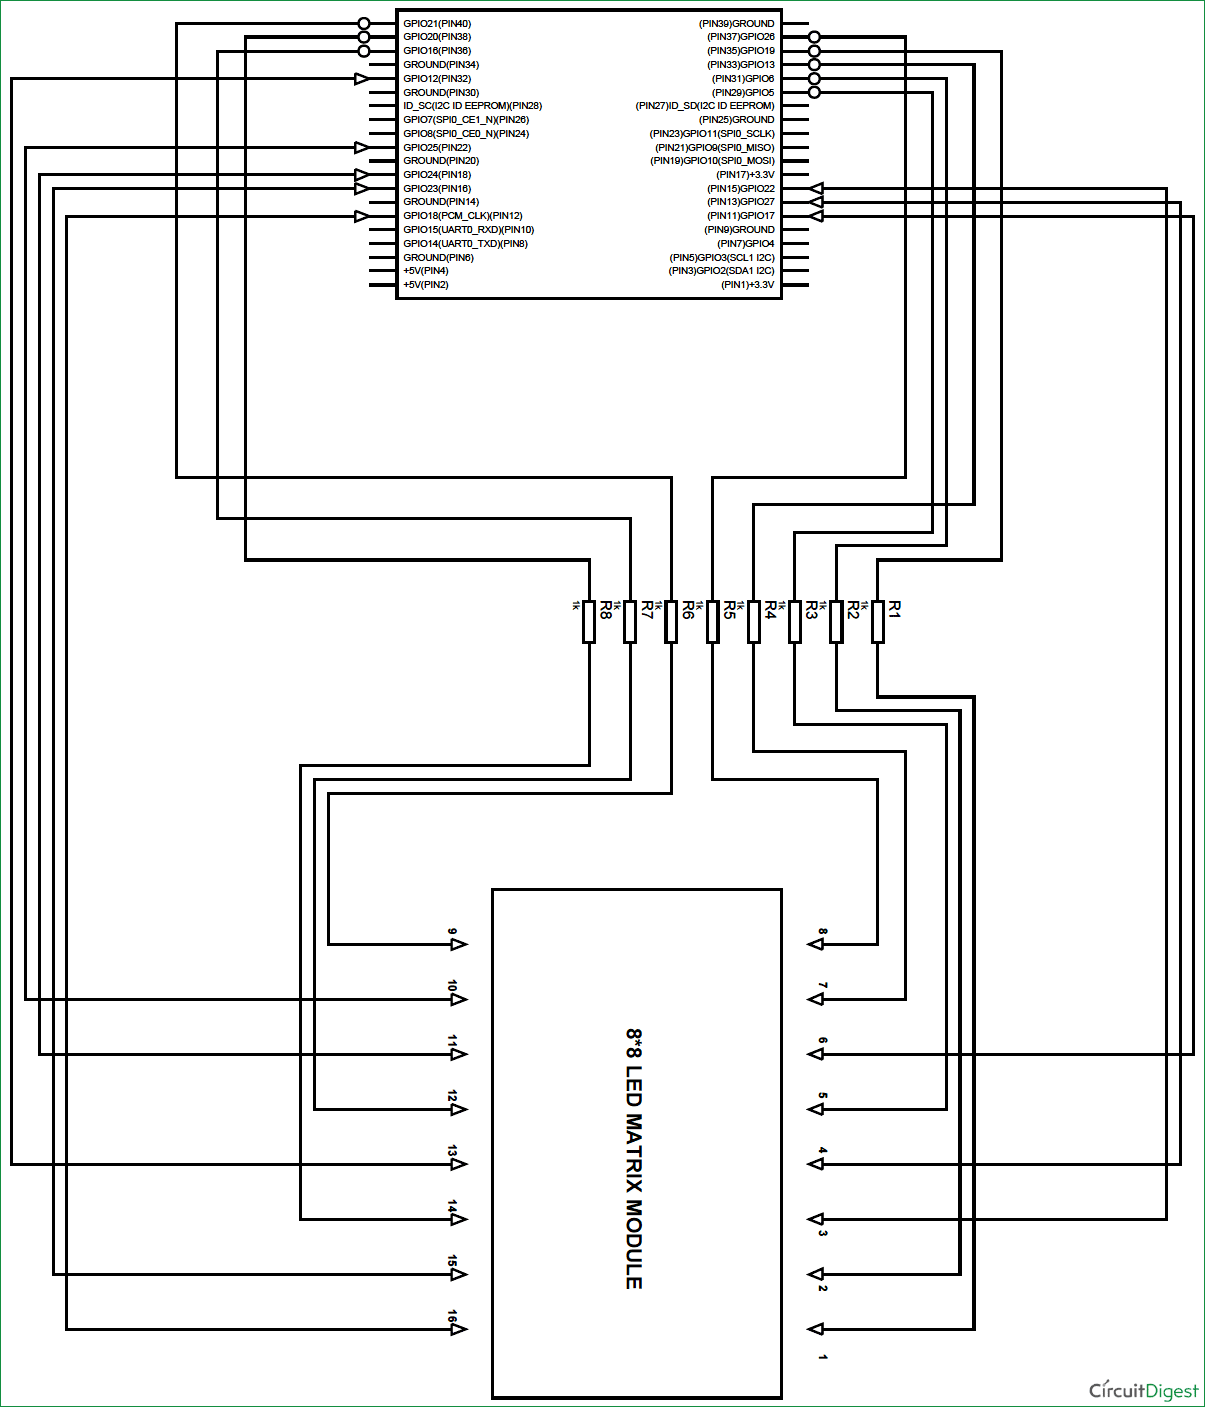 Interfacing-8x8-LED-Matrix-with-Raspberry-Pi-circuit